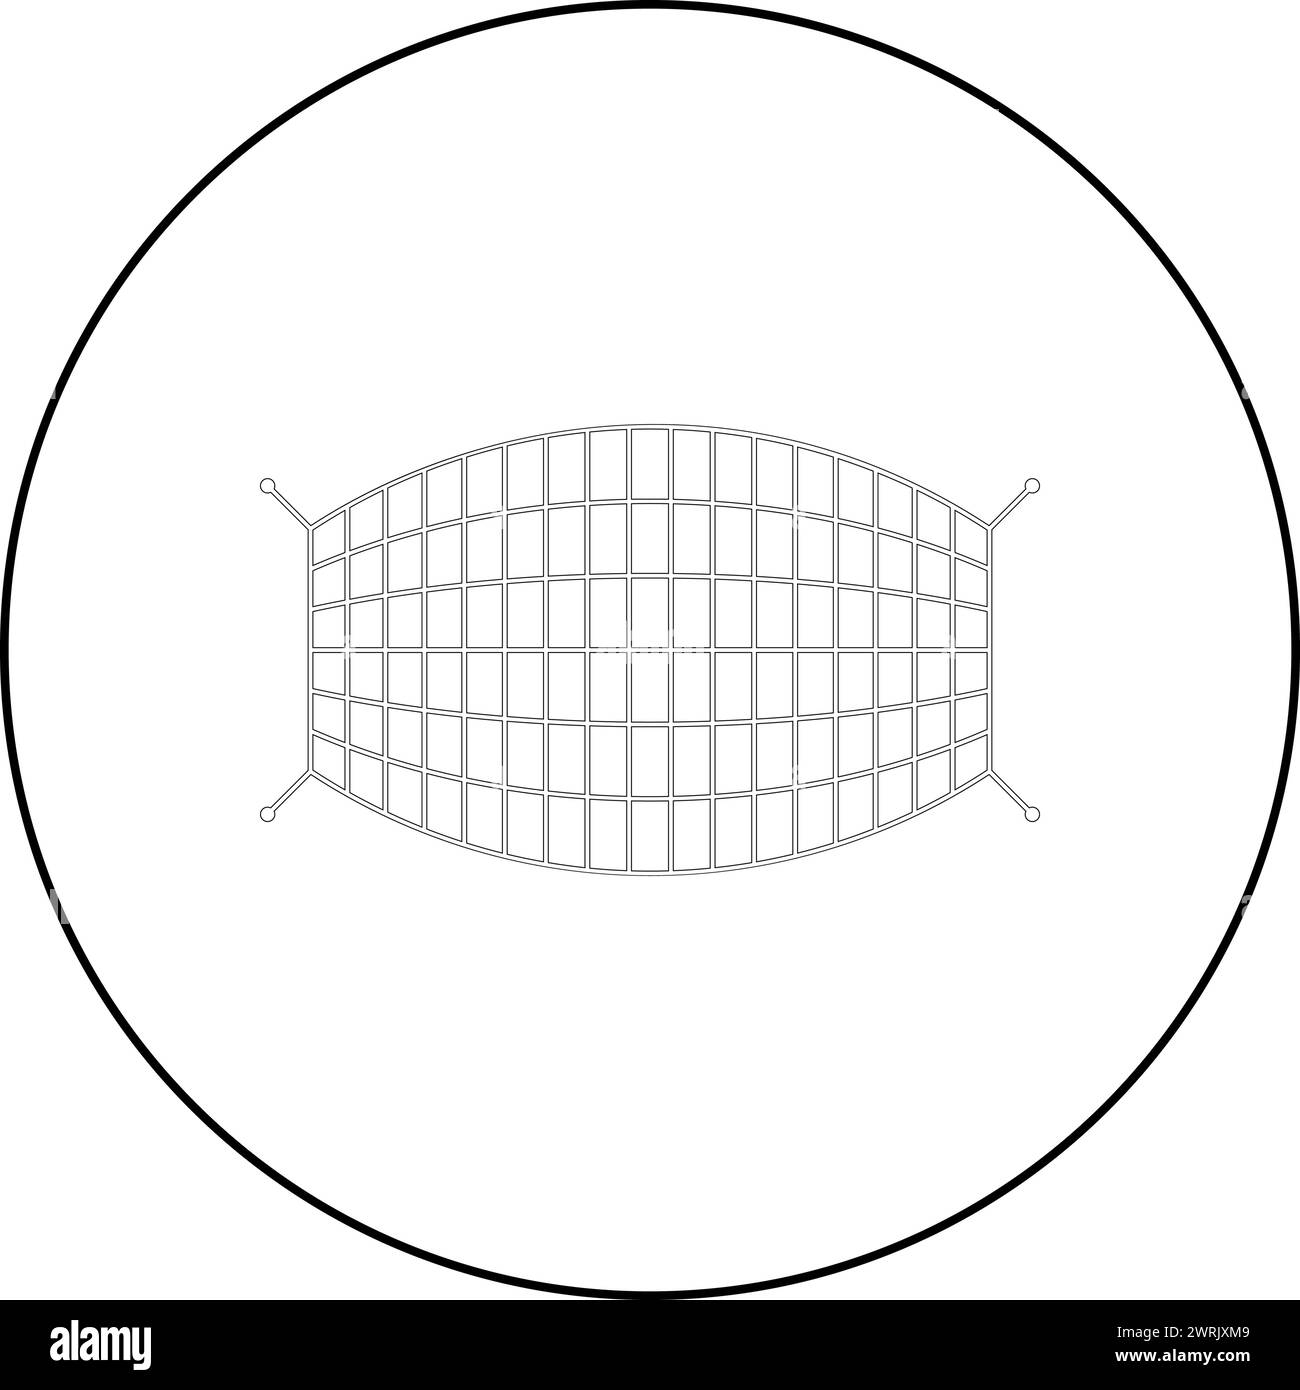 Fisherman linear icon. Thin line illustration. Fish catch. Contour